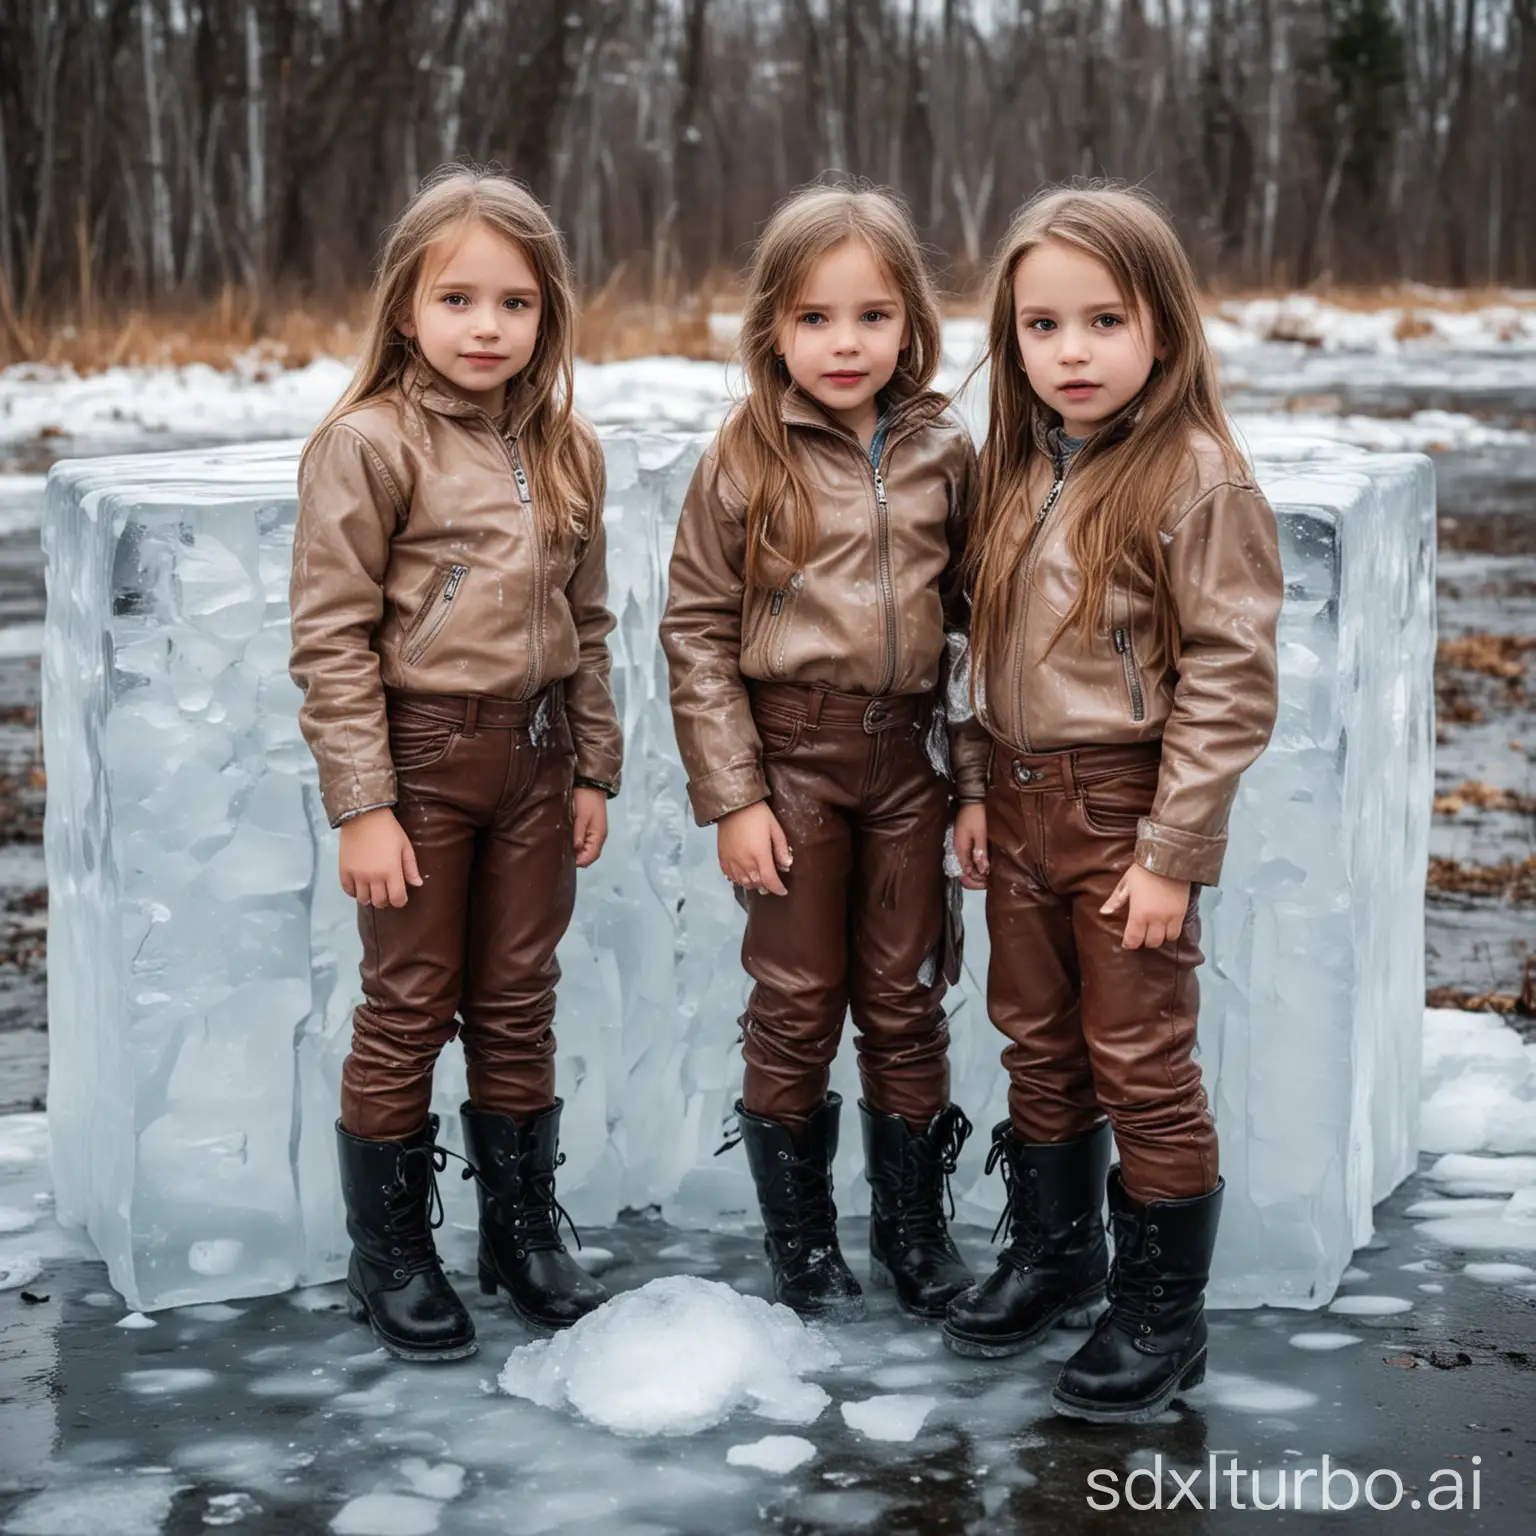 Frozen-Children-Girls-in-Leather-Pants-Ice-Sculpture